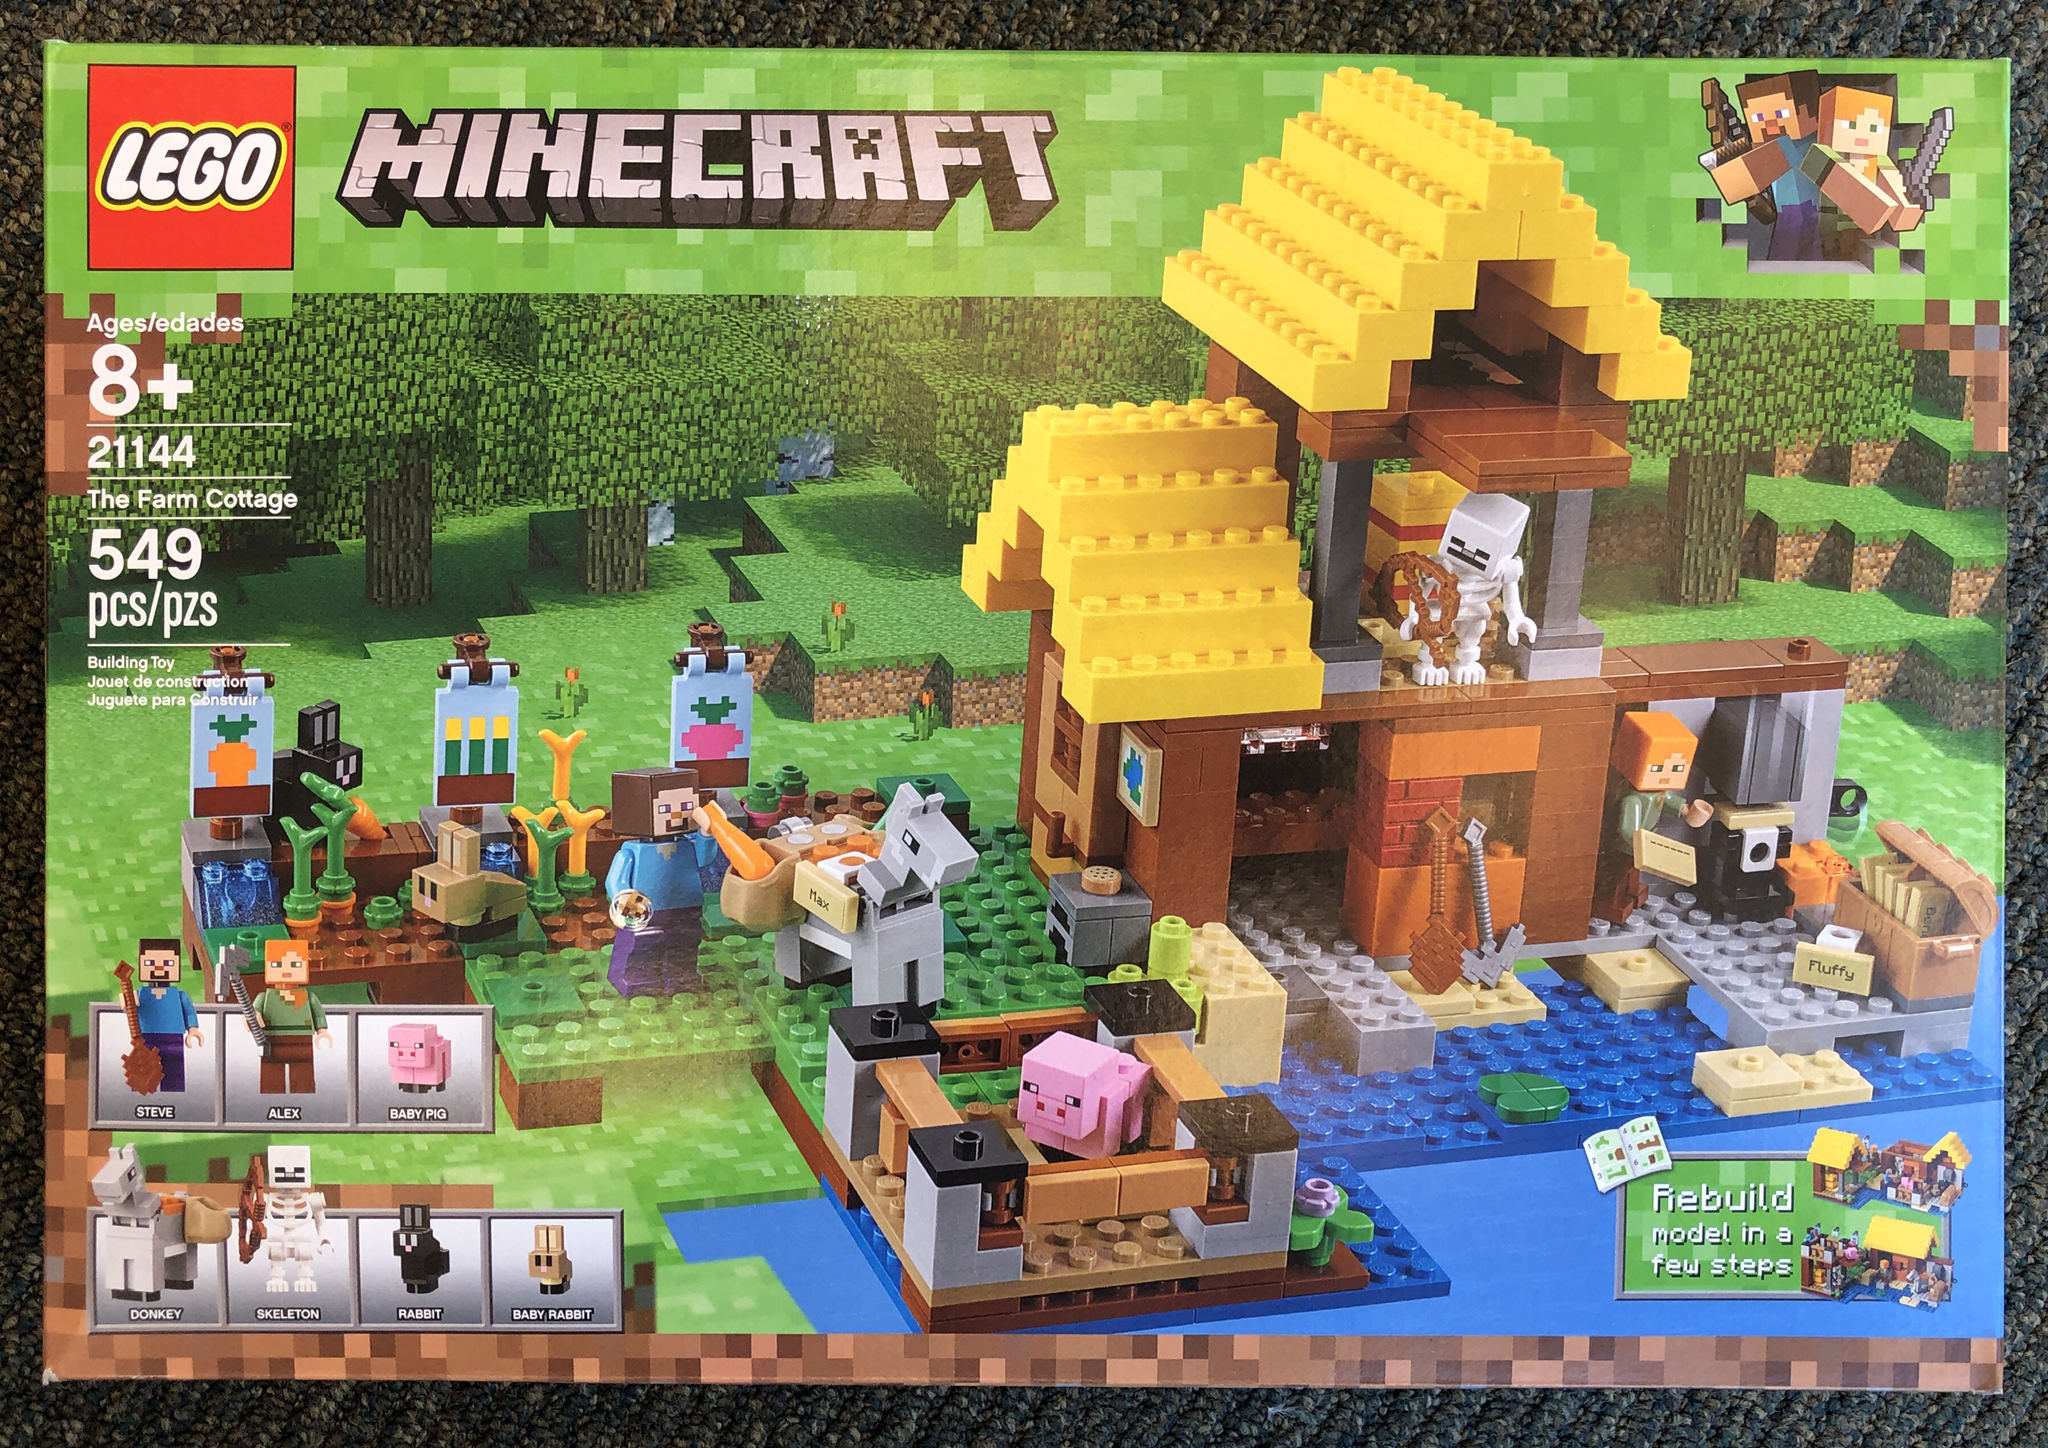 farm cottage minecraft lego